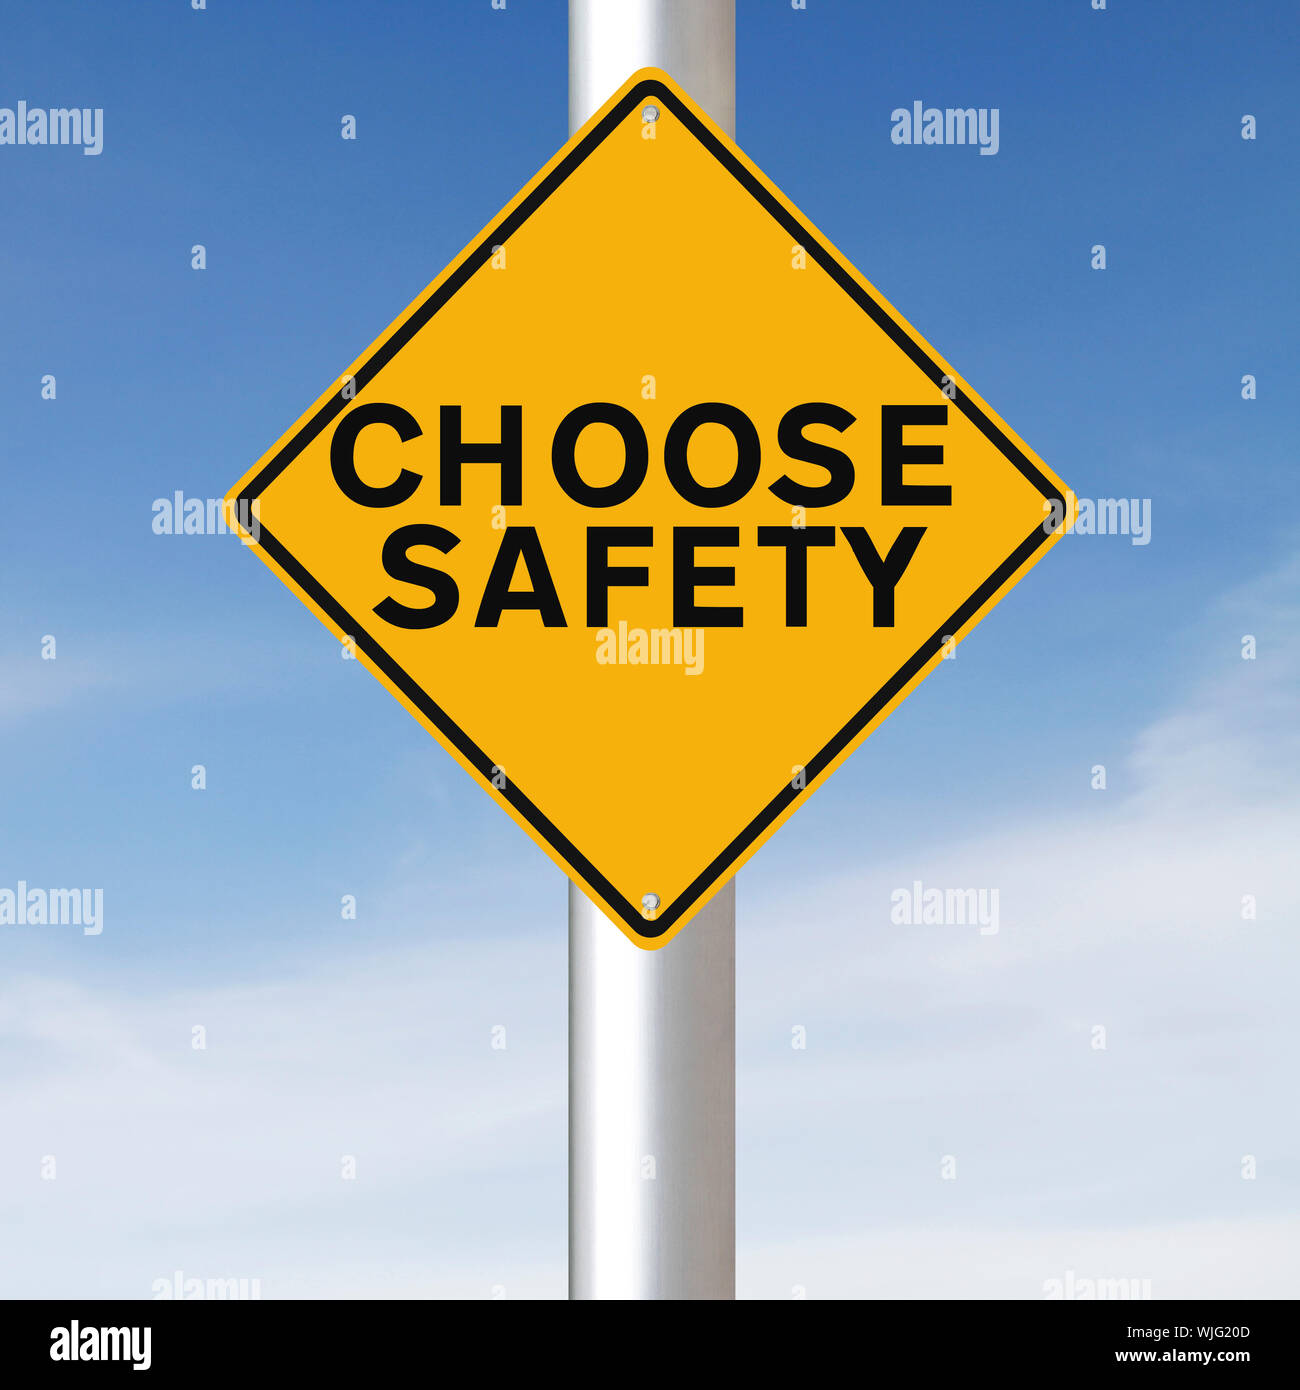 Choose Safety Stock Photo